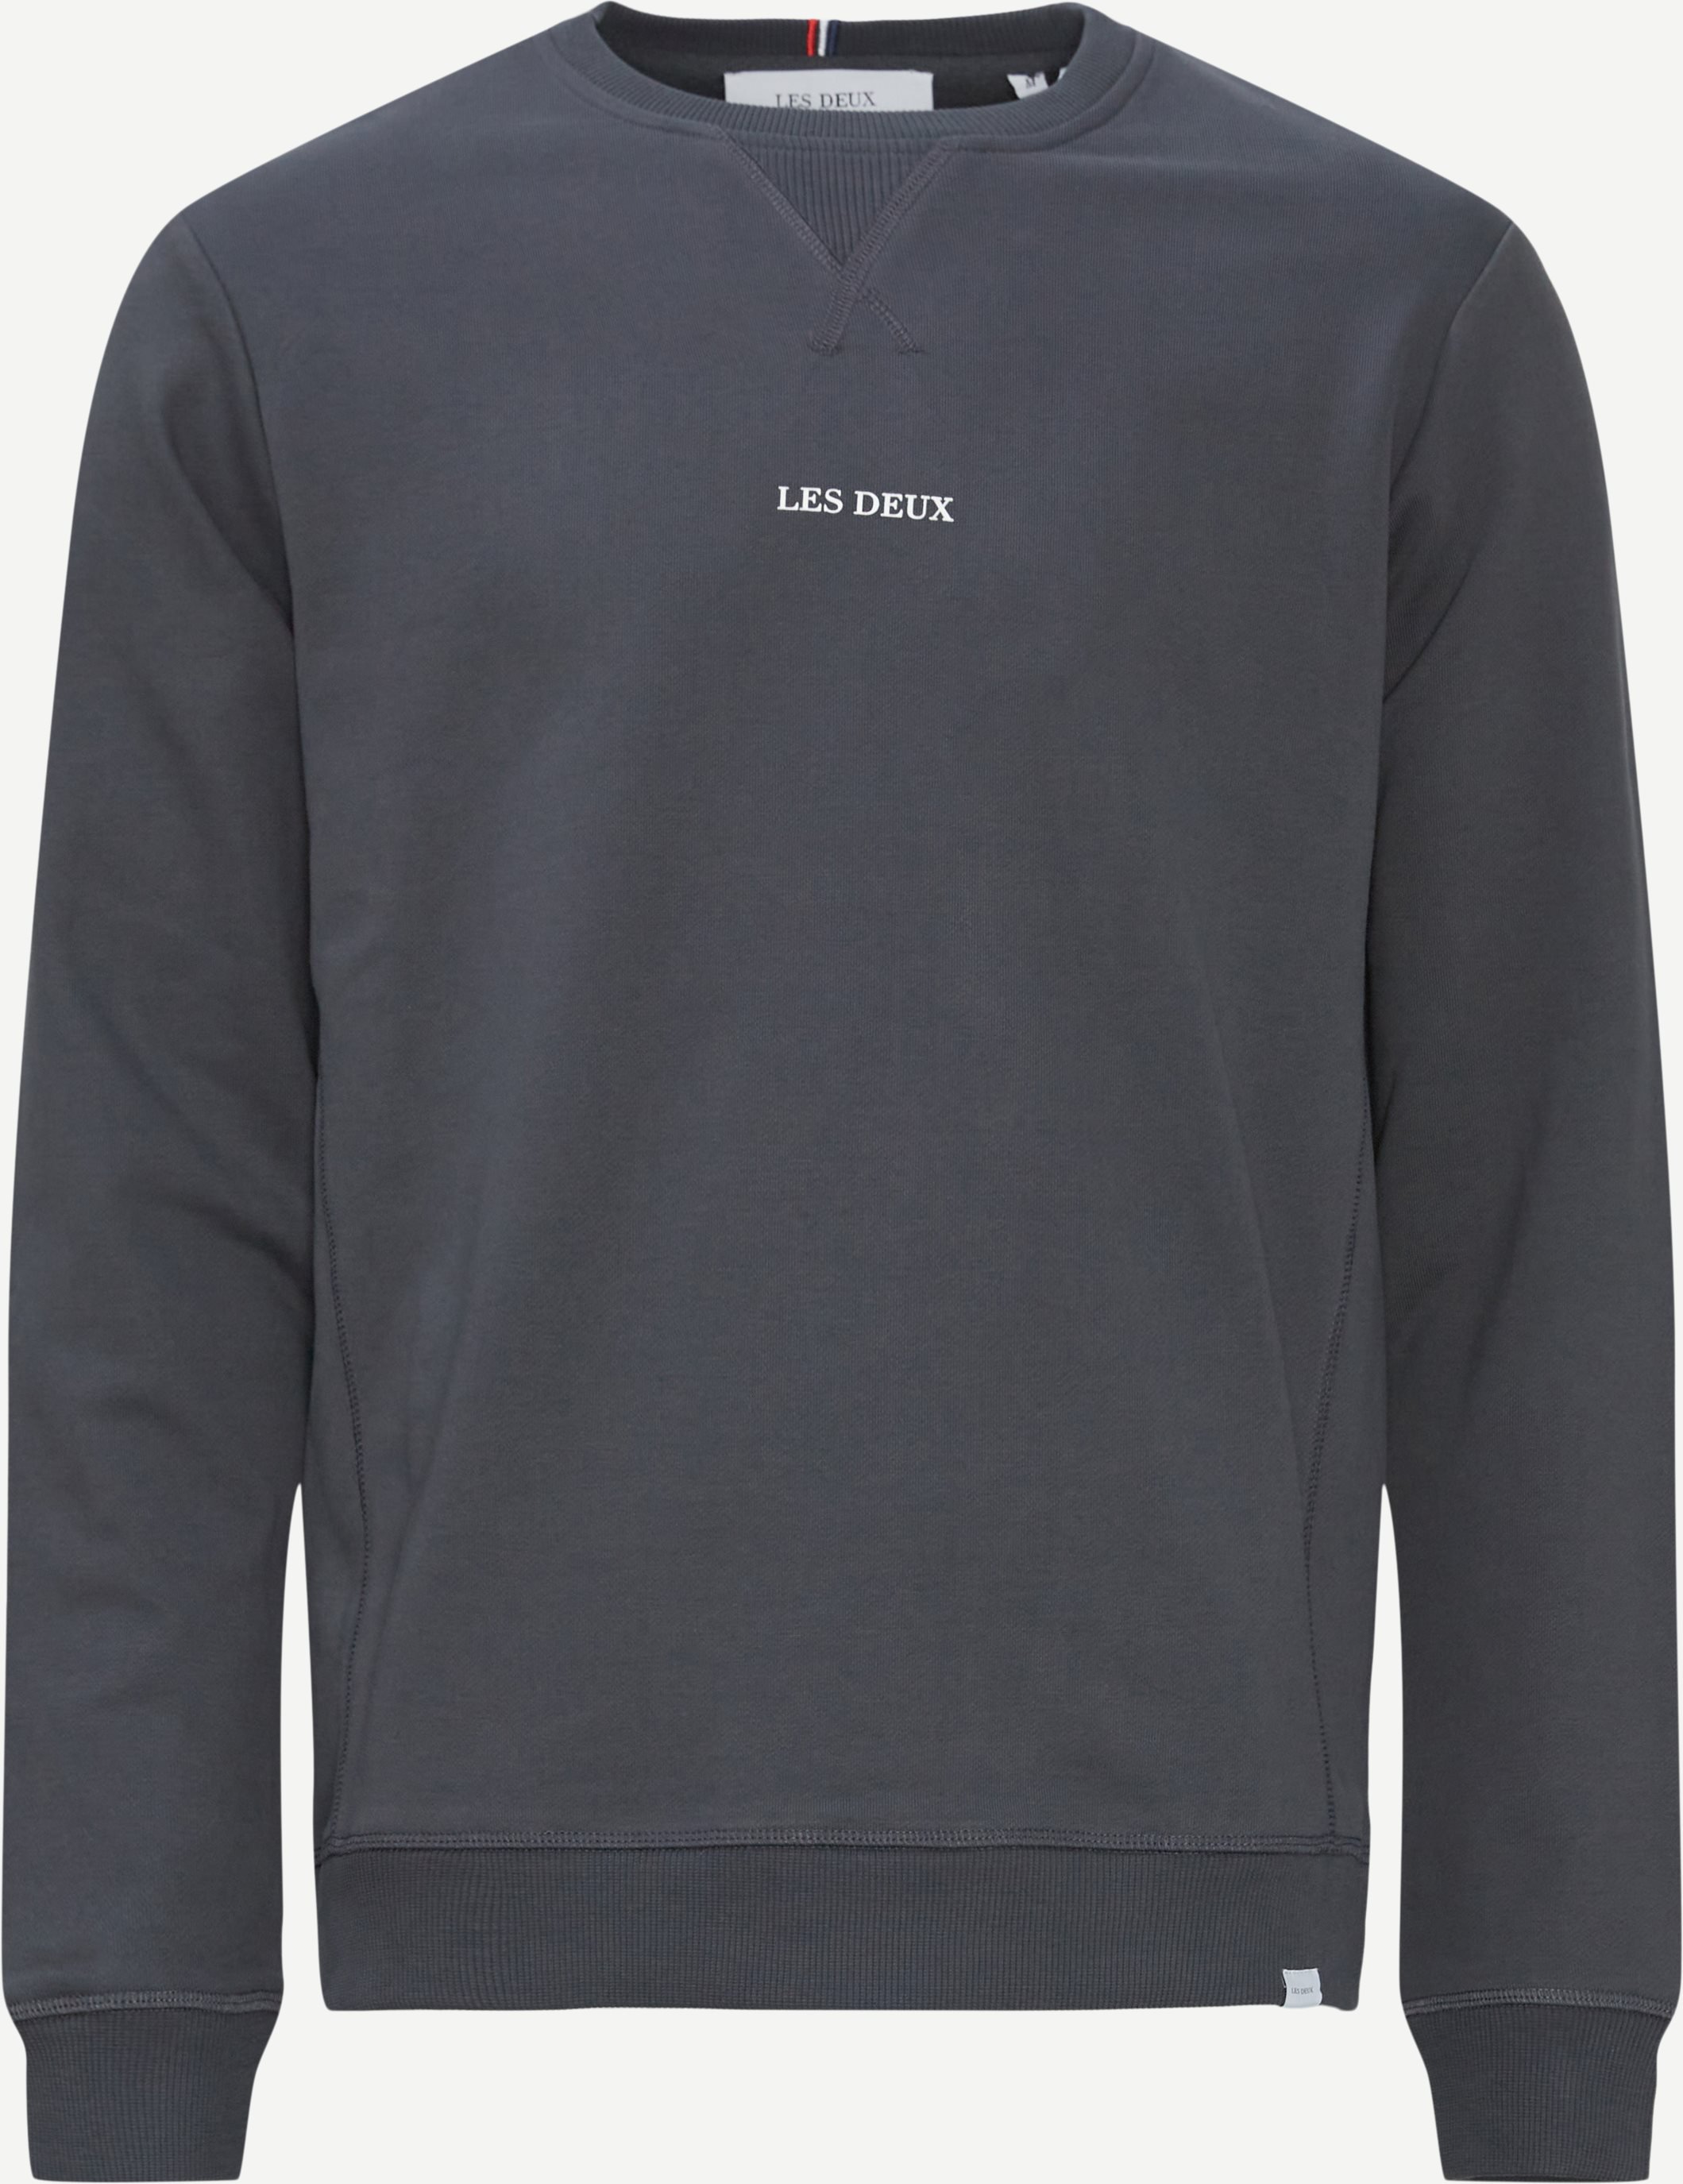 Sweatshirts - Regular fit - Grey